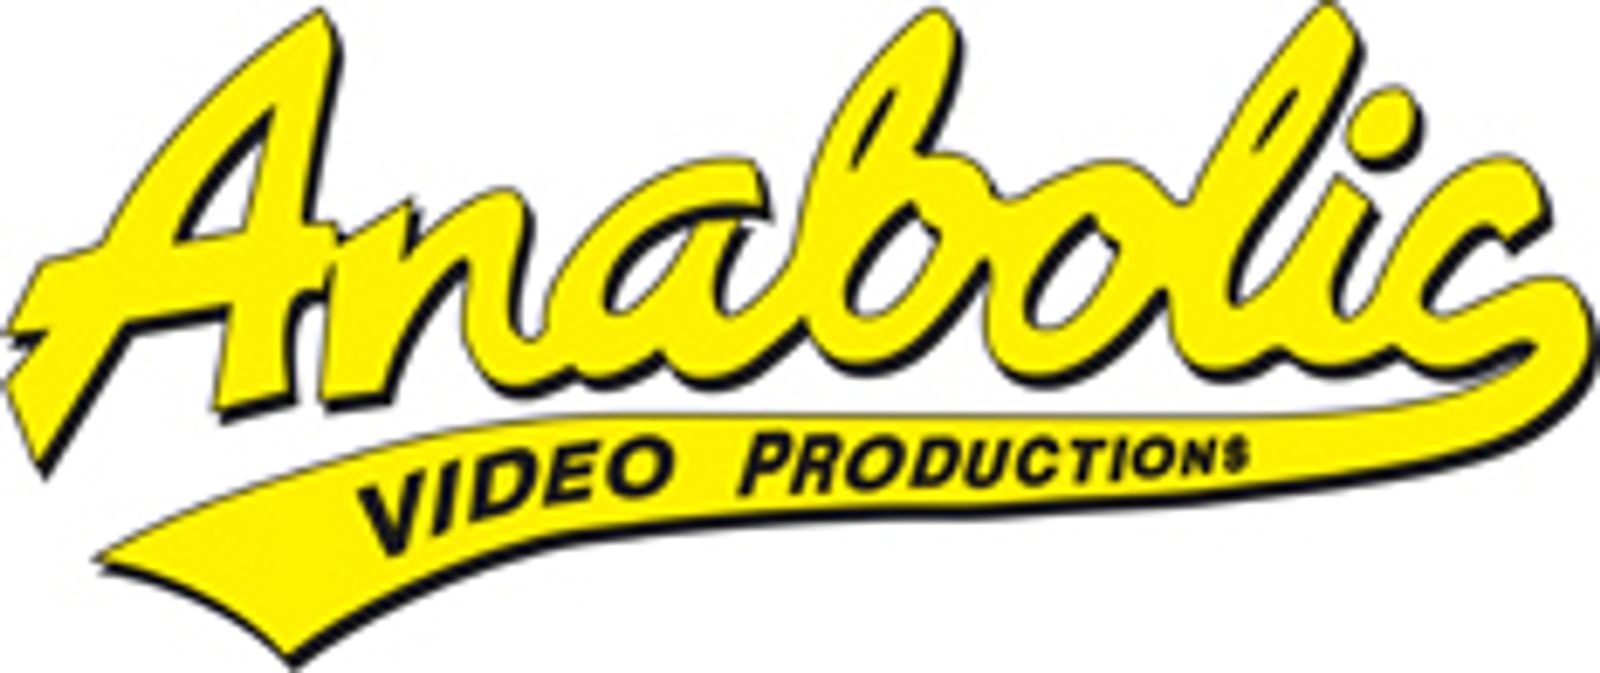 Anabolic Video